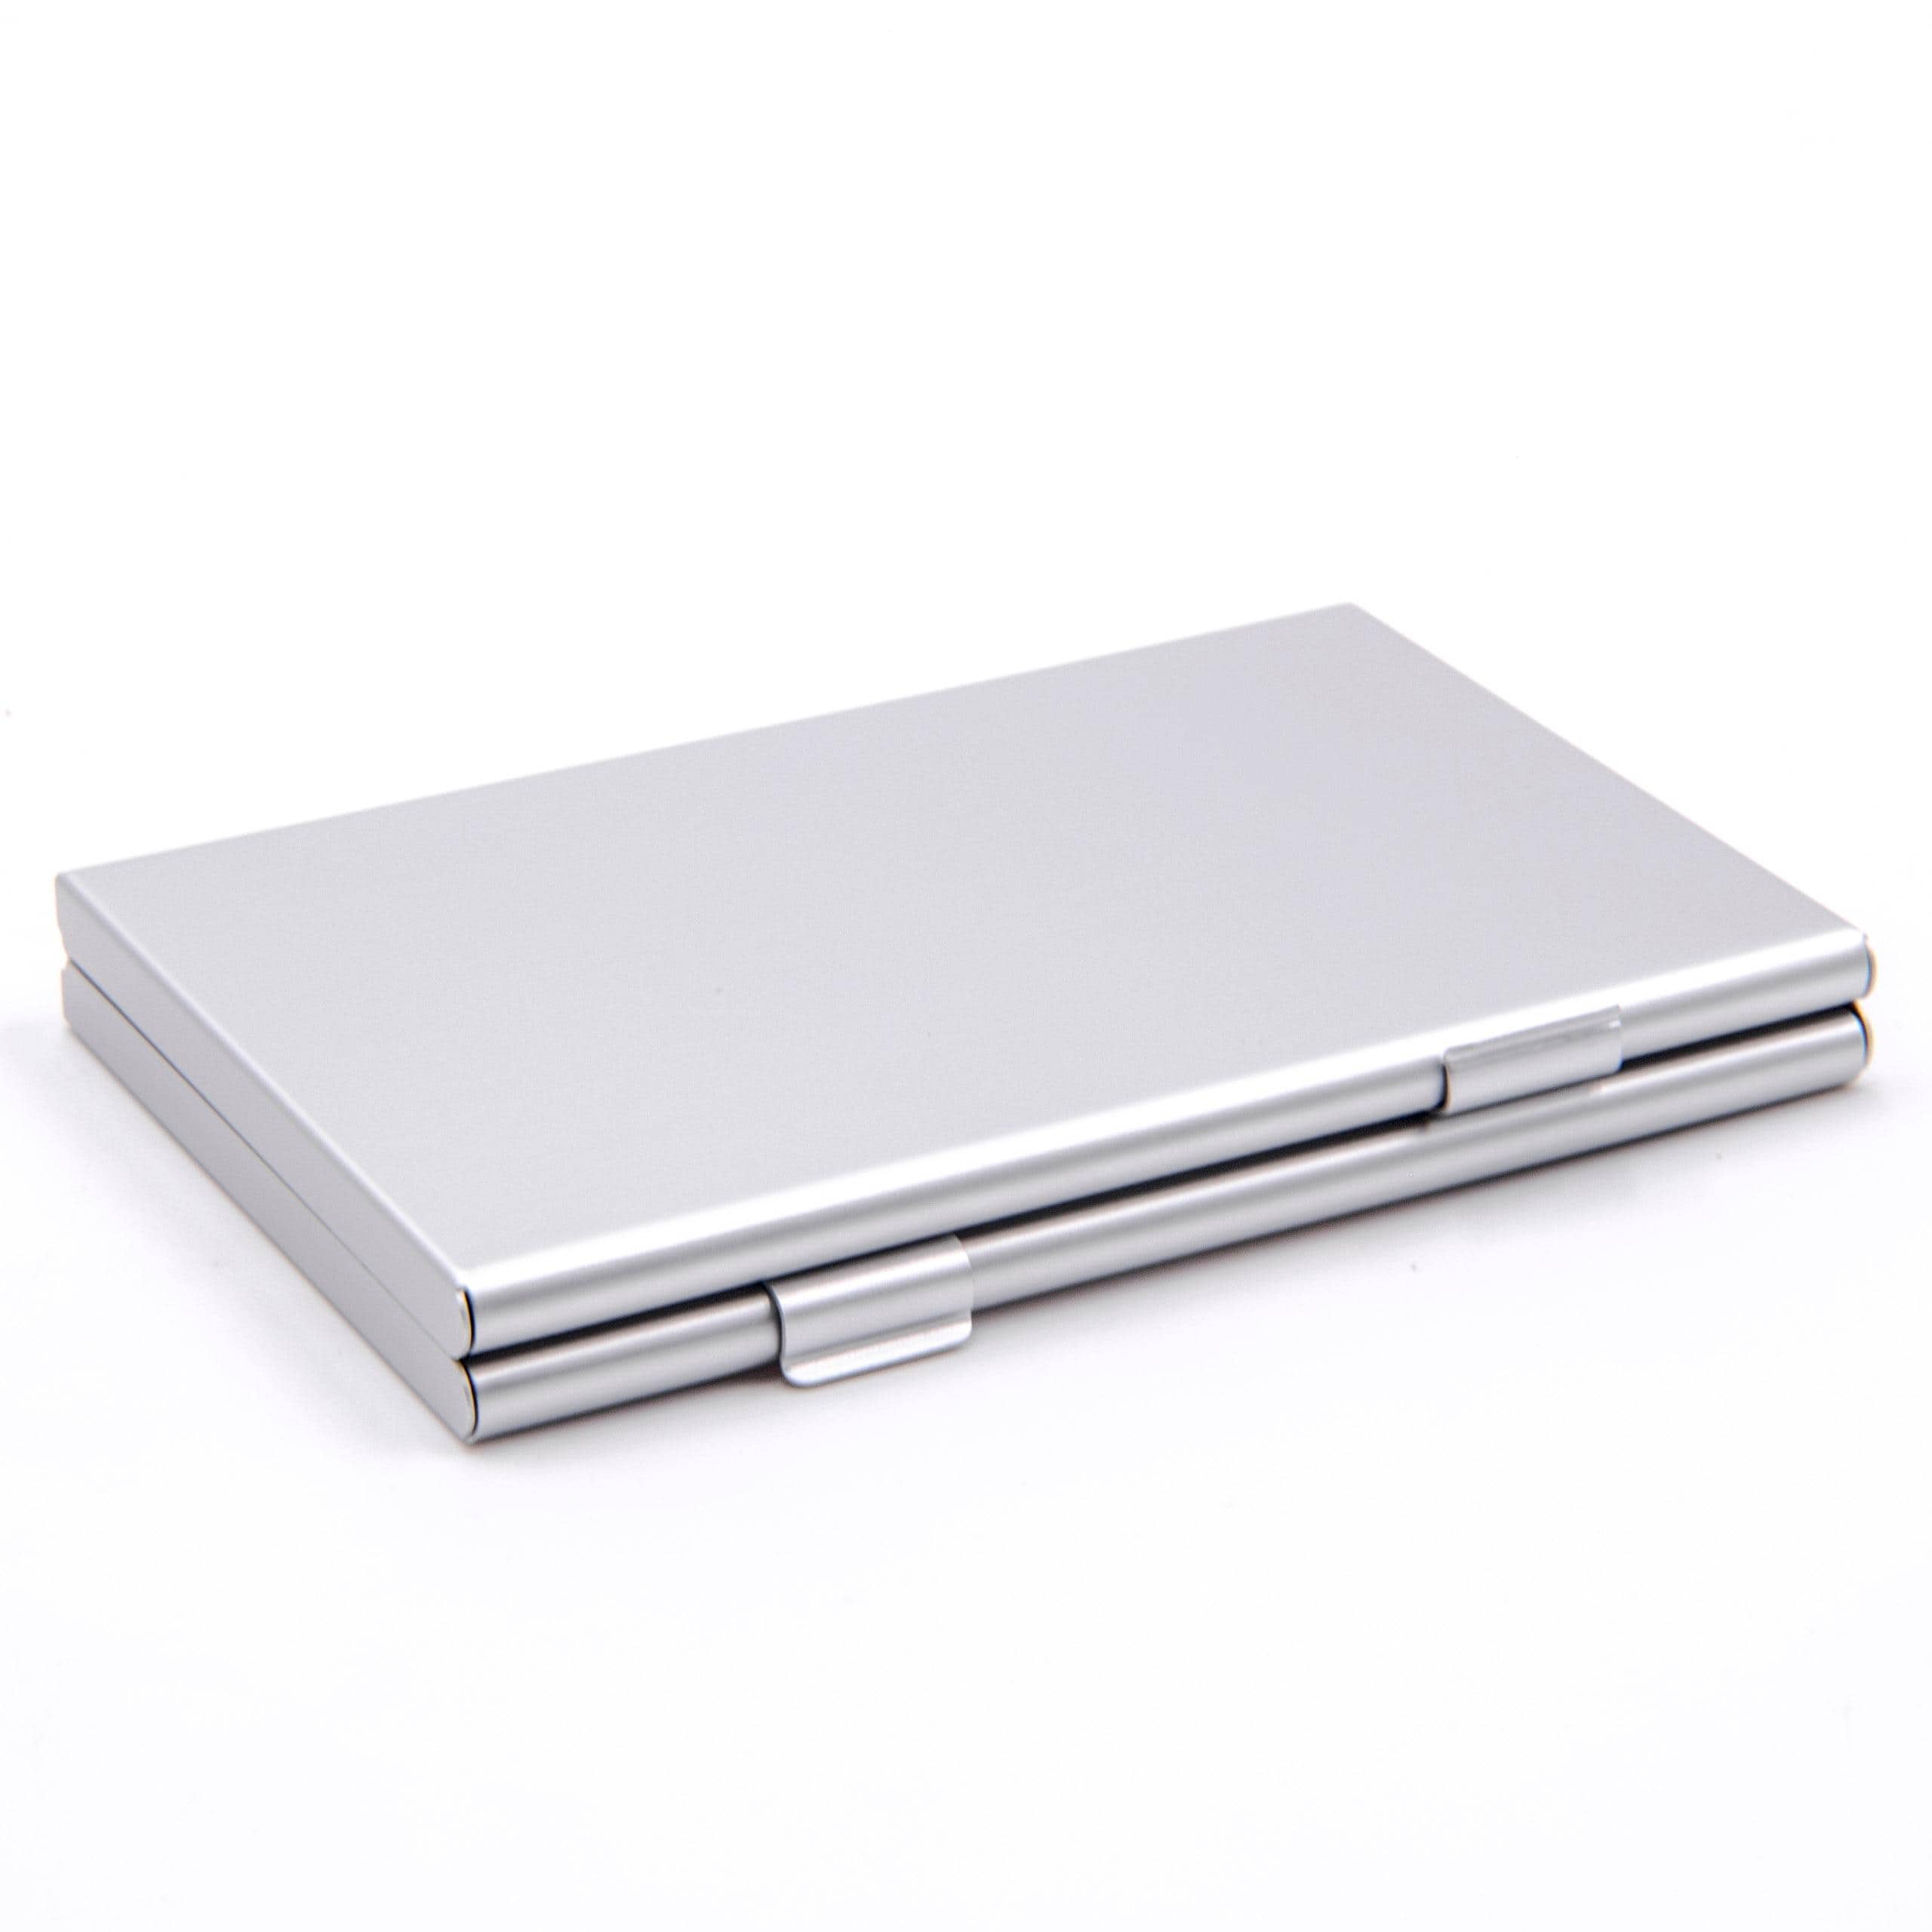 Etui passend für Speicherkarten 16x microSD - Case, Aluminium, silber